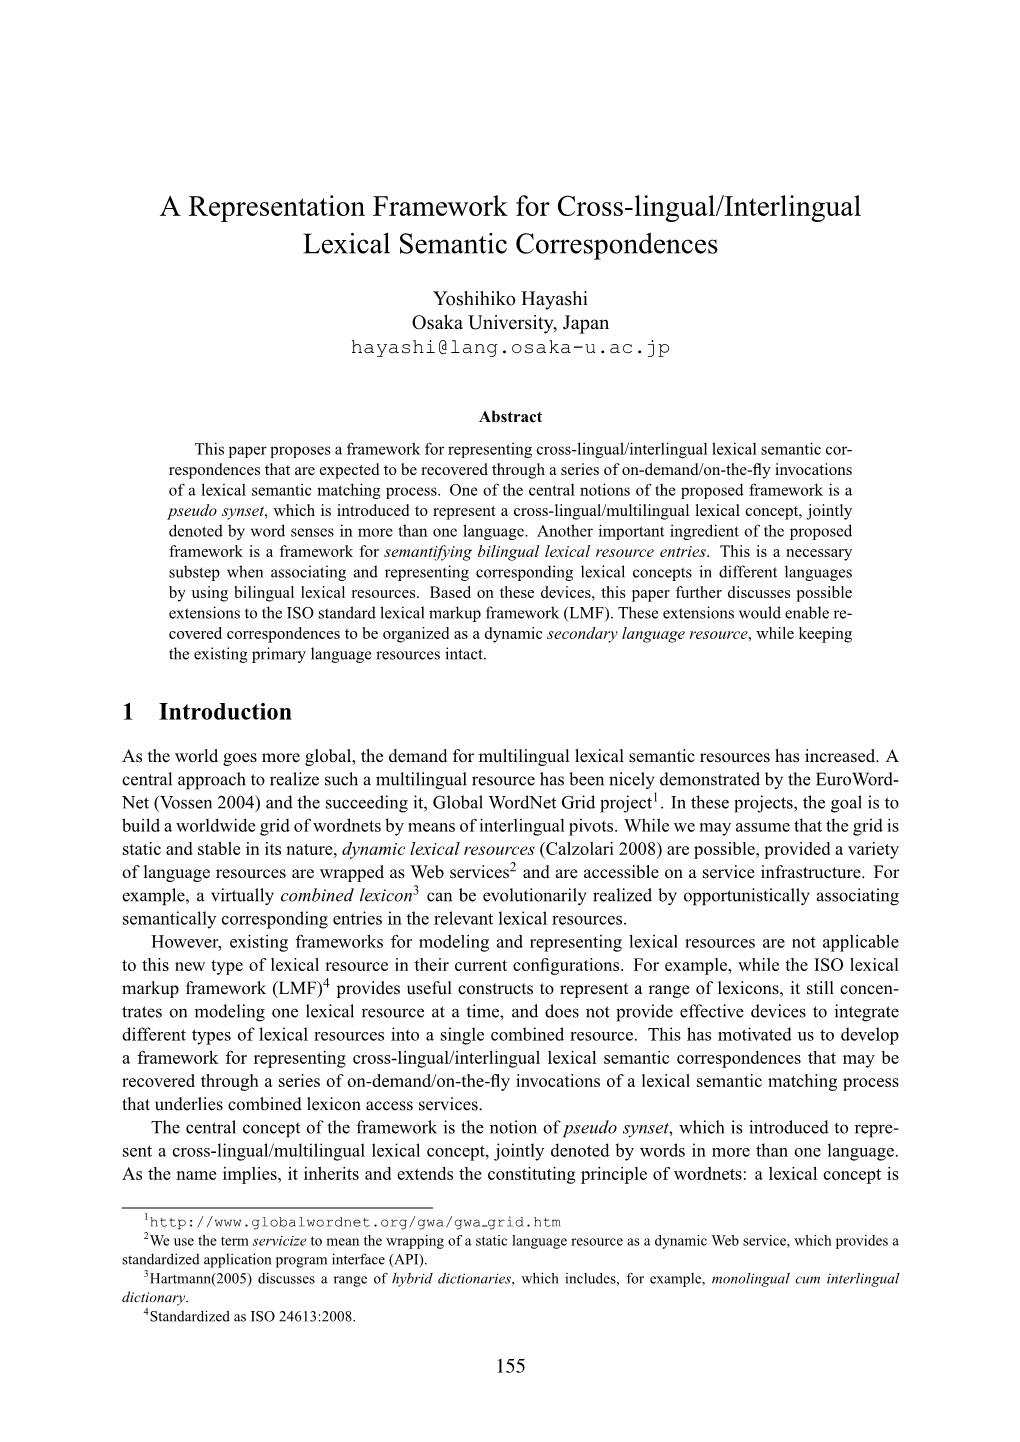 A Representation Framework for Cross-Lingual/Interlingual Lexical Semantic Correspondences